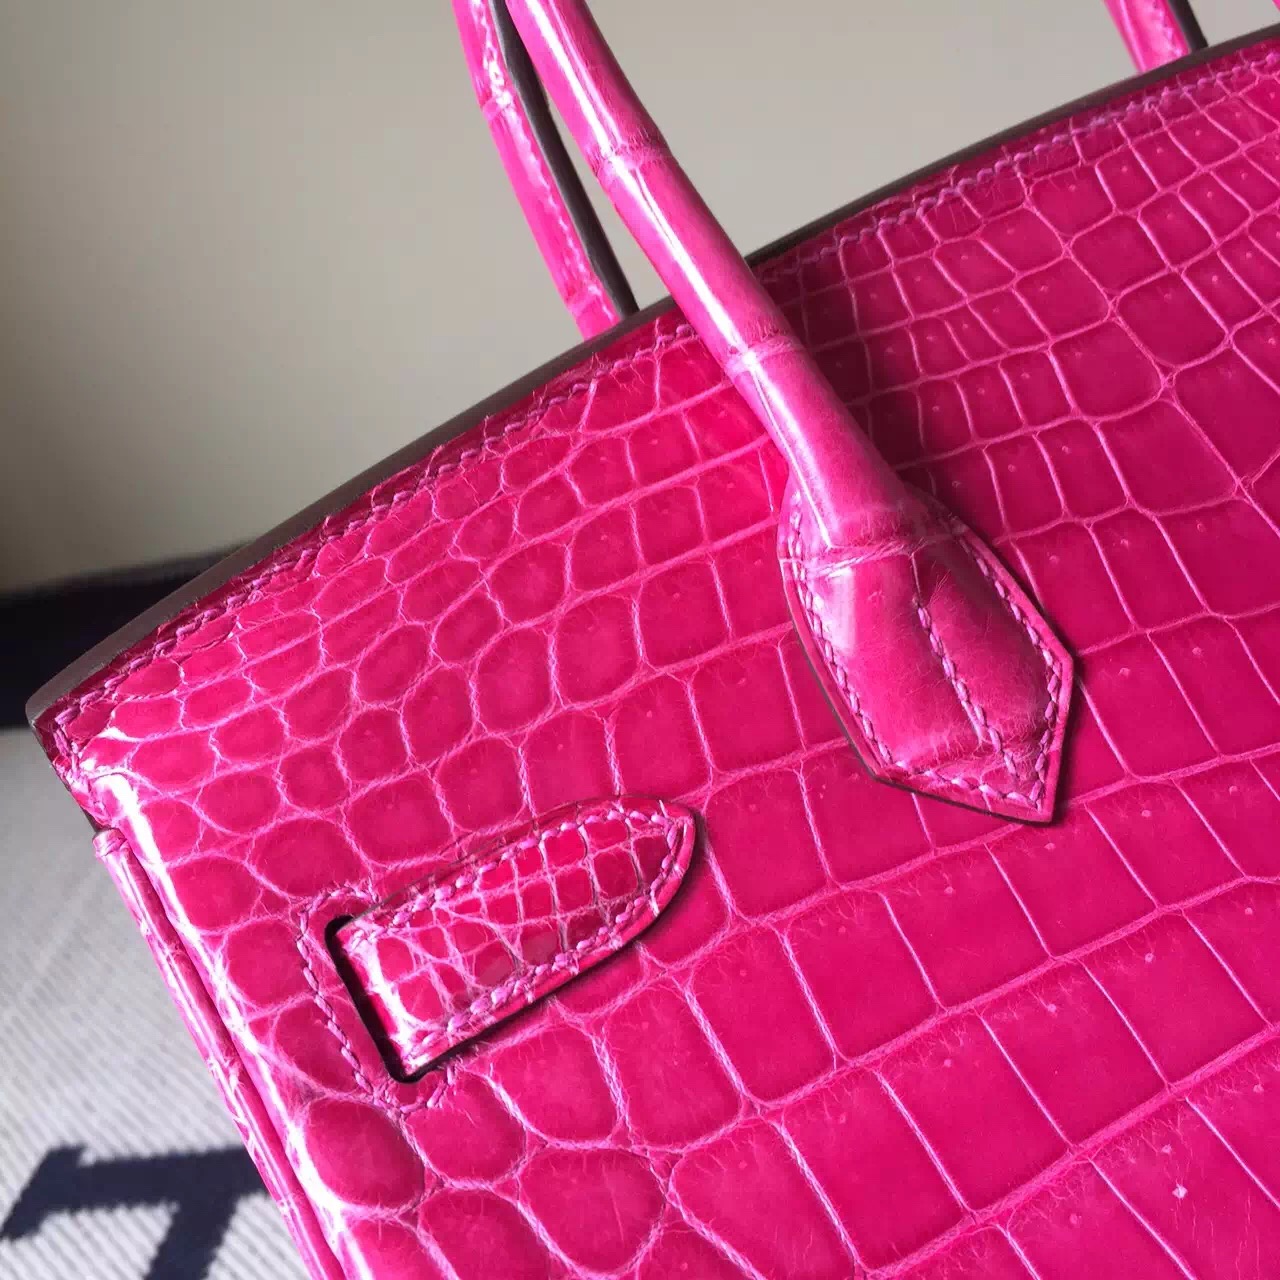 Cheap Hermes Crocodile Shiny Leather Birkin30cm Bag in Peach Pink